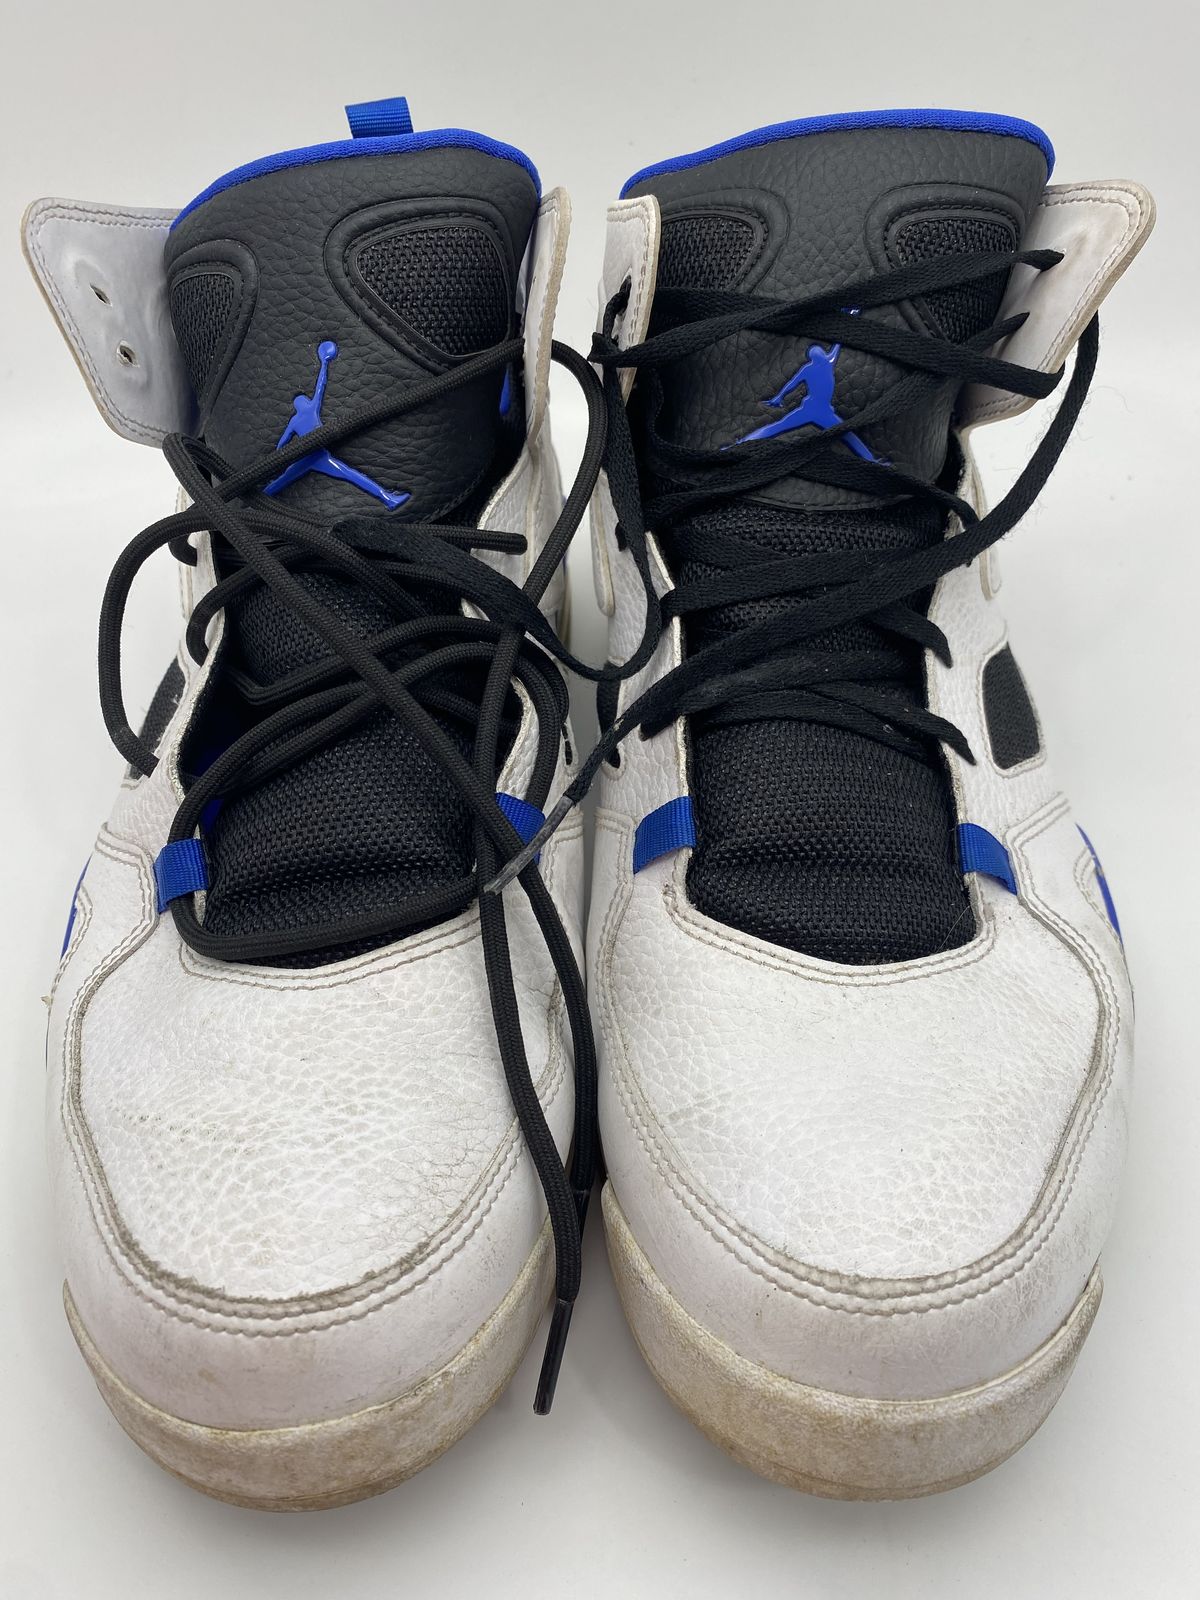 Jordan Flight Club 91 Bred Basketball Shoes